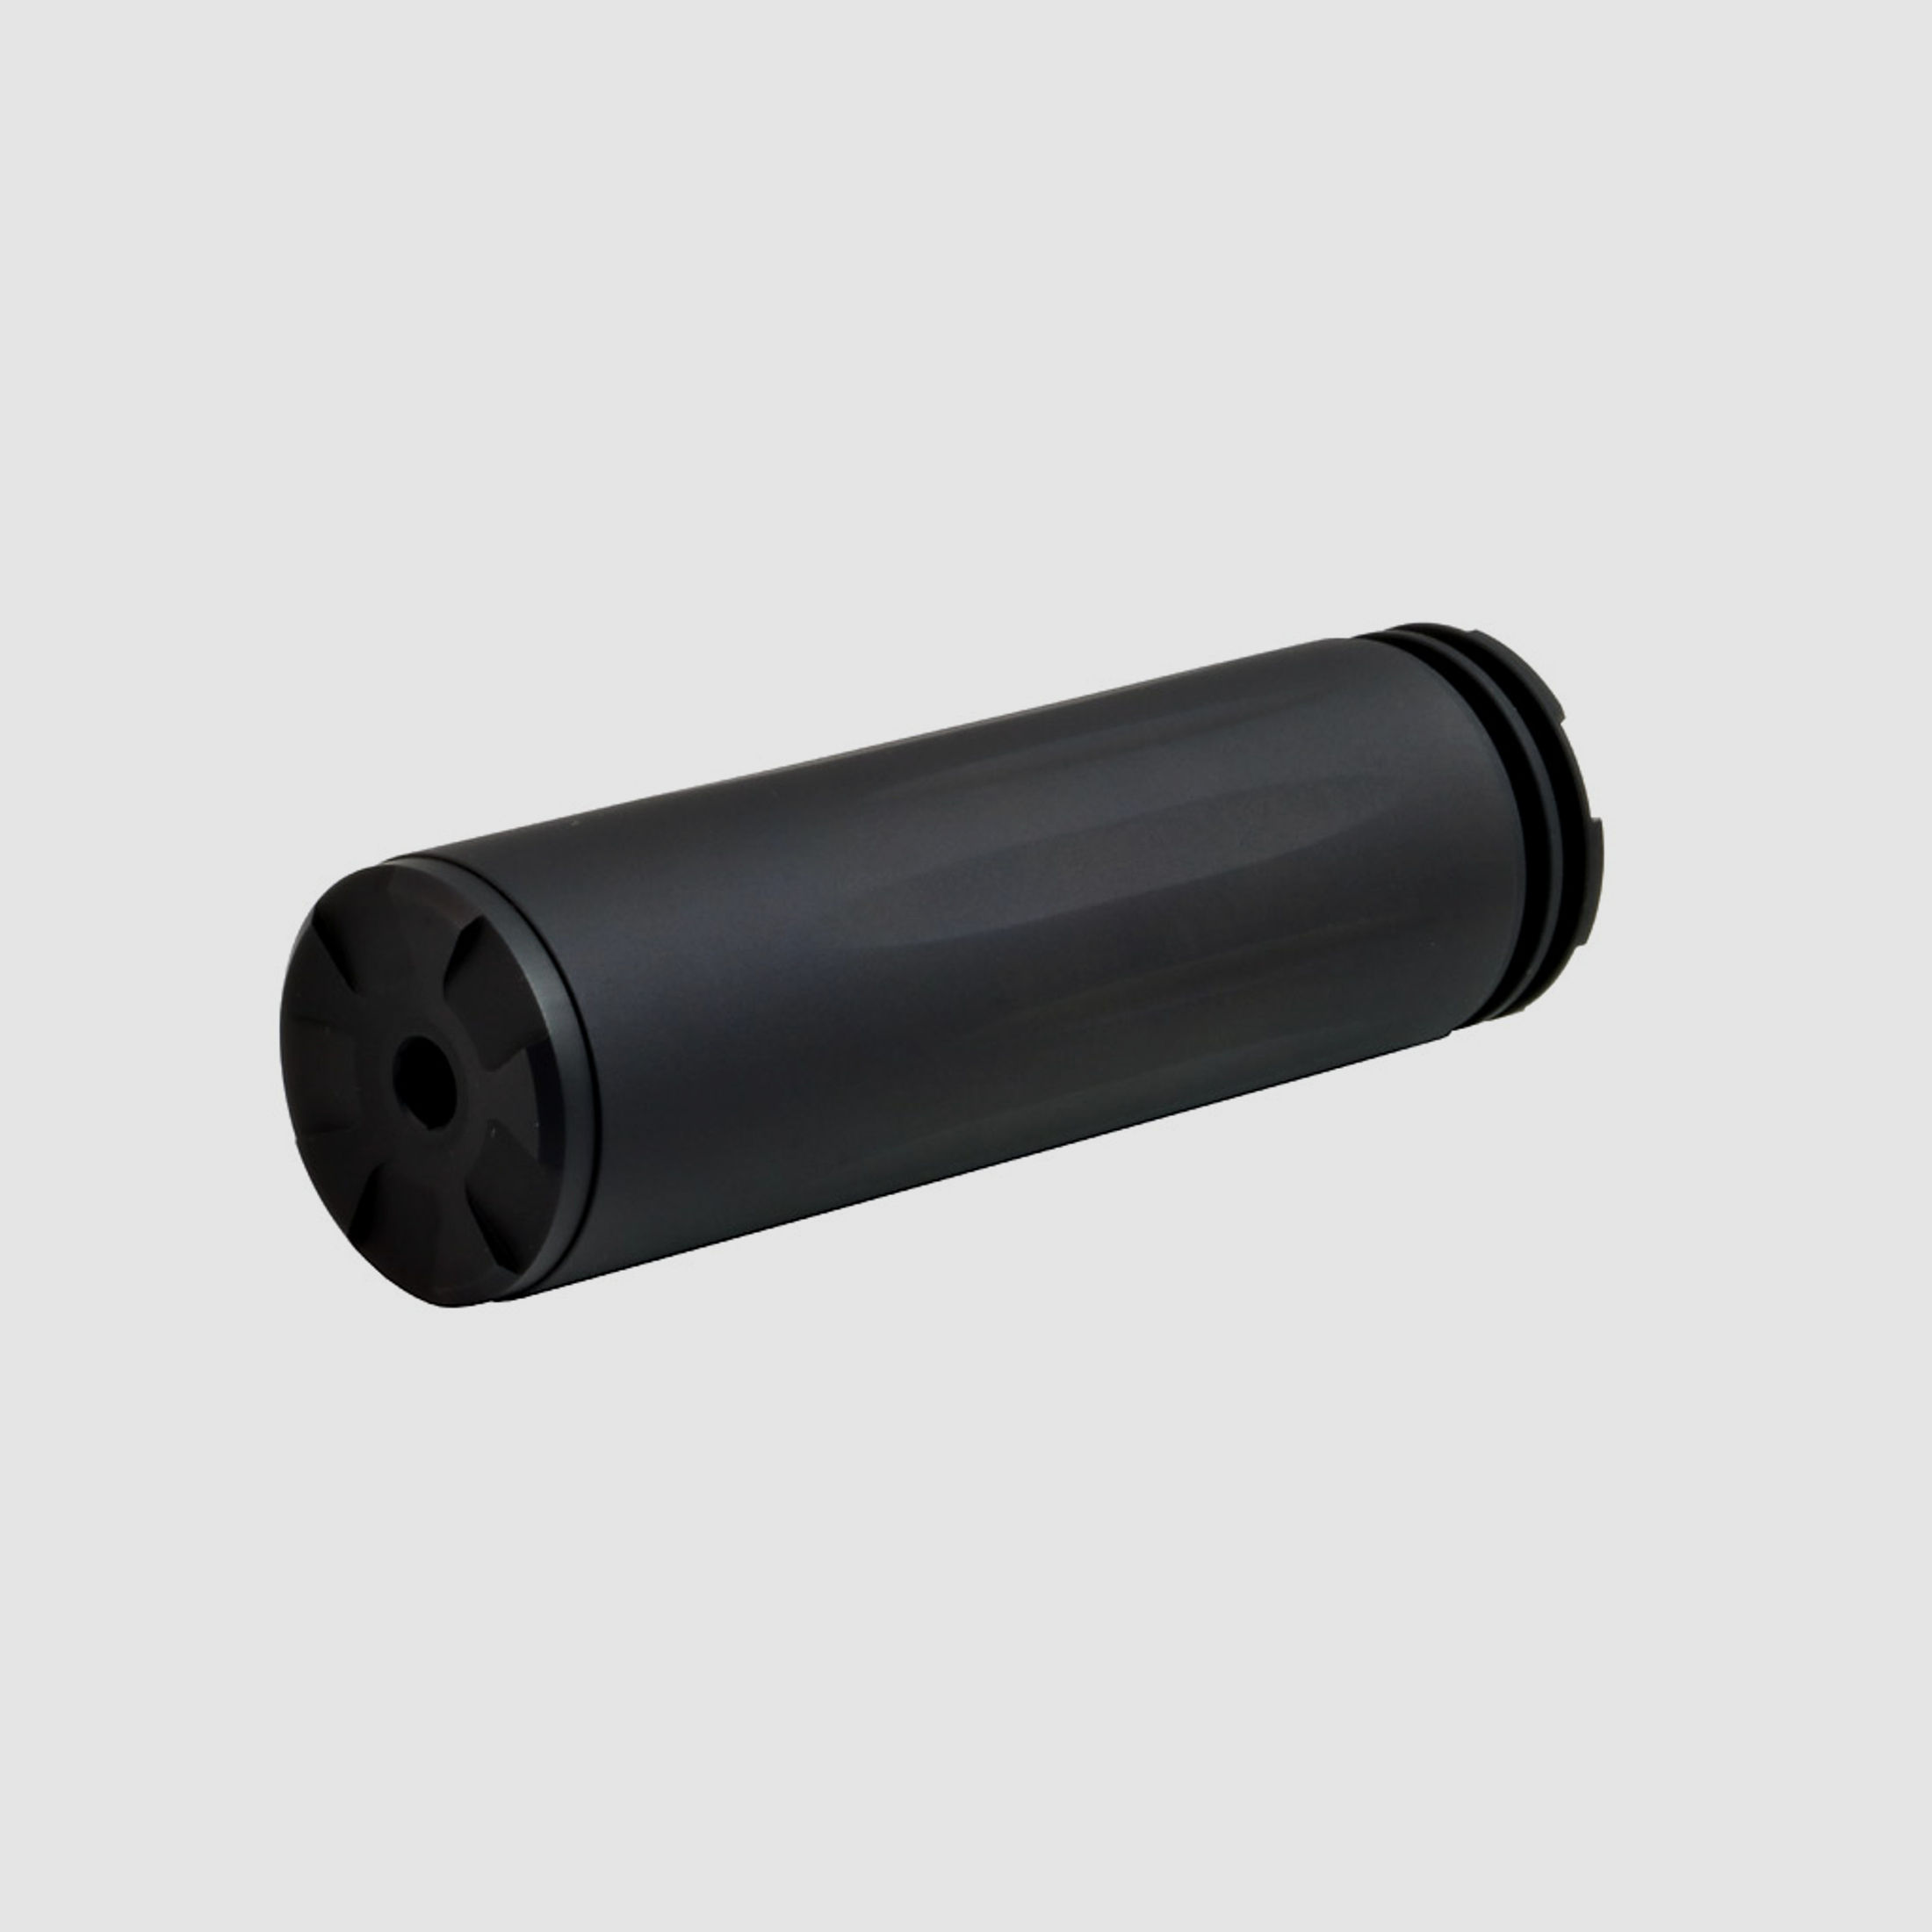 Weihrauch SchalldĂ¤mpfer XL-K schraubbar 1/2 Zoll UNF Gewinde schwarz Kaliber 4,5 bis 5,5 mm (P18)